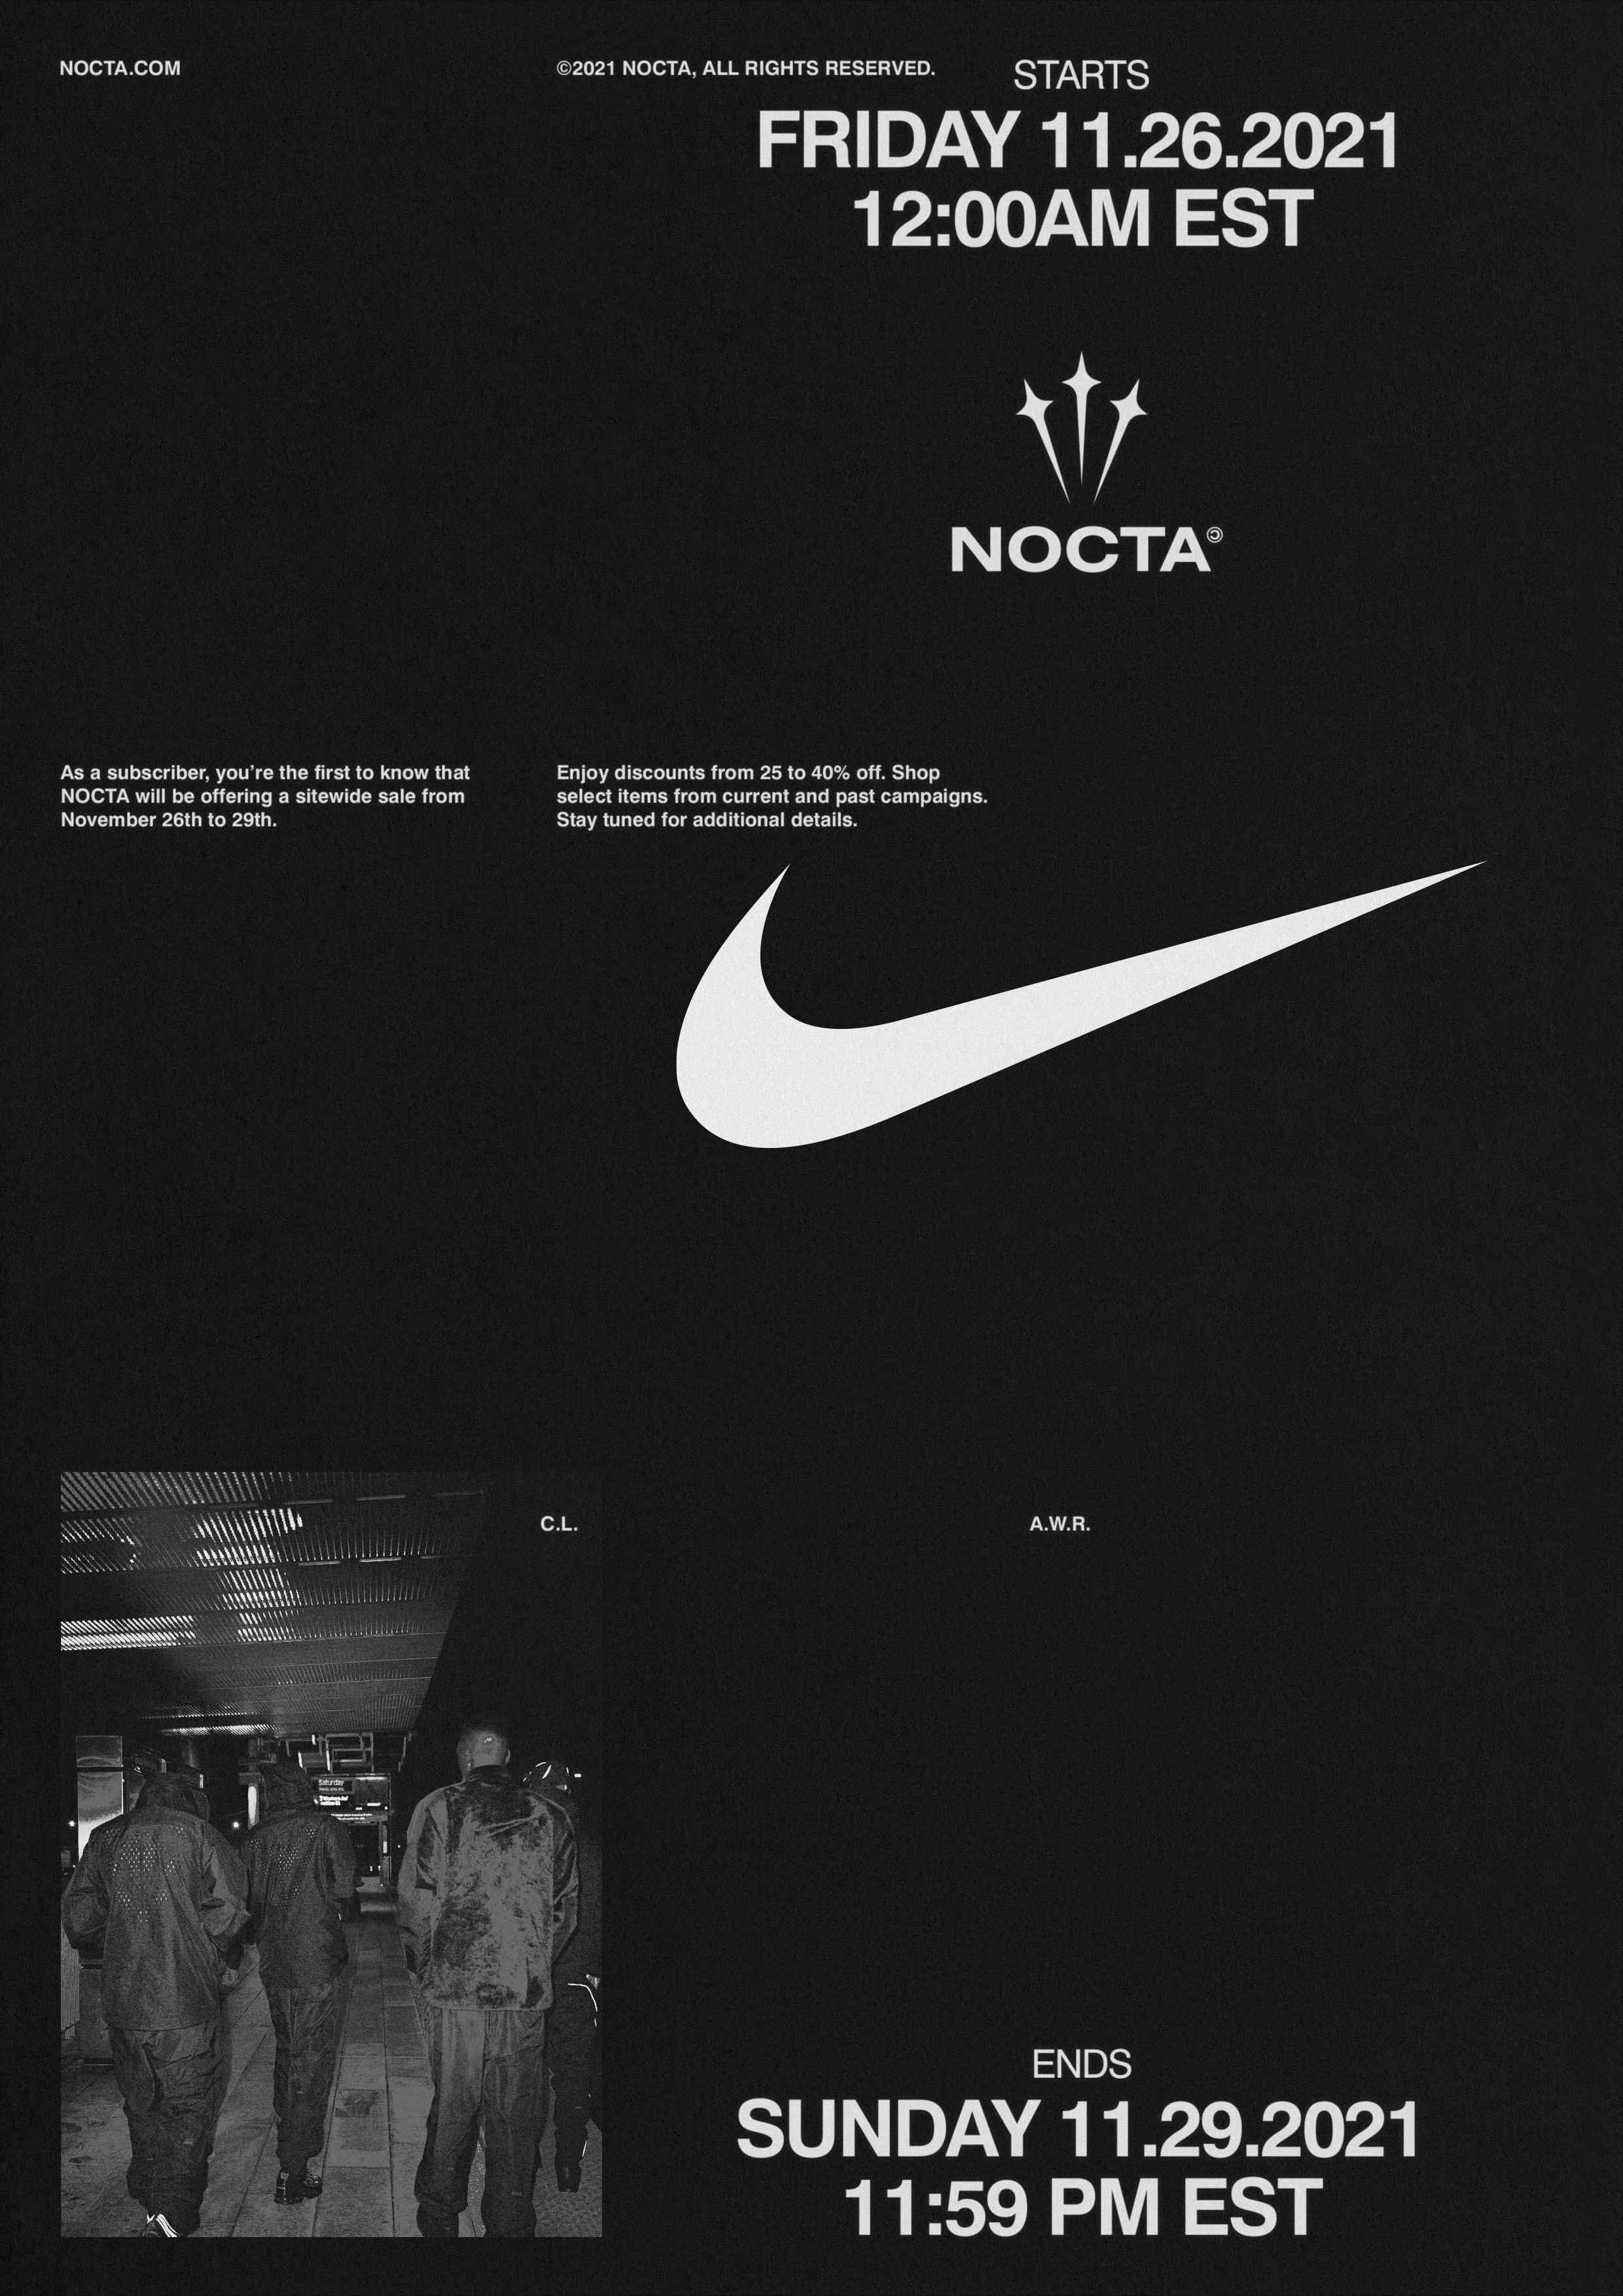 Nike NOCTA Design, Treatment & More Brand Collateral